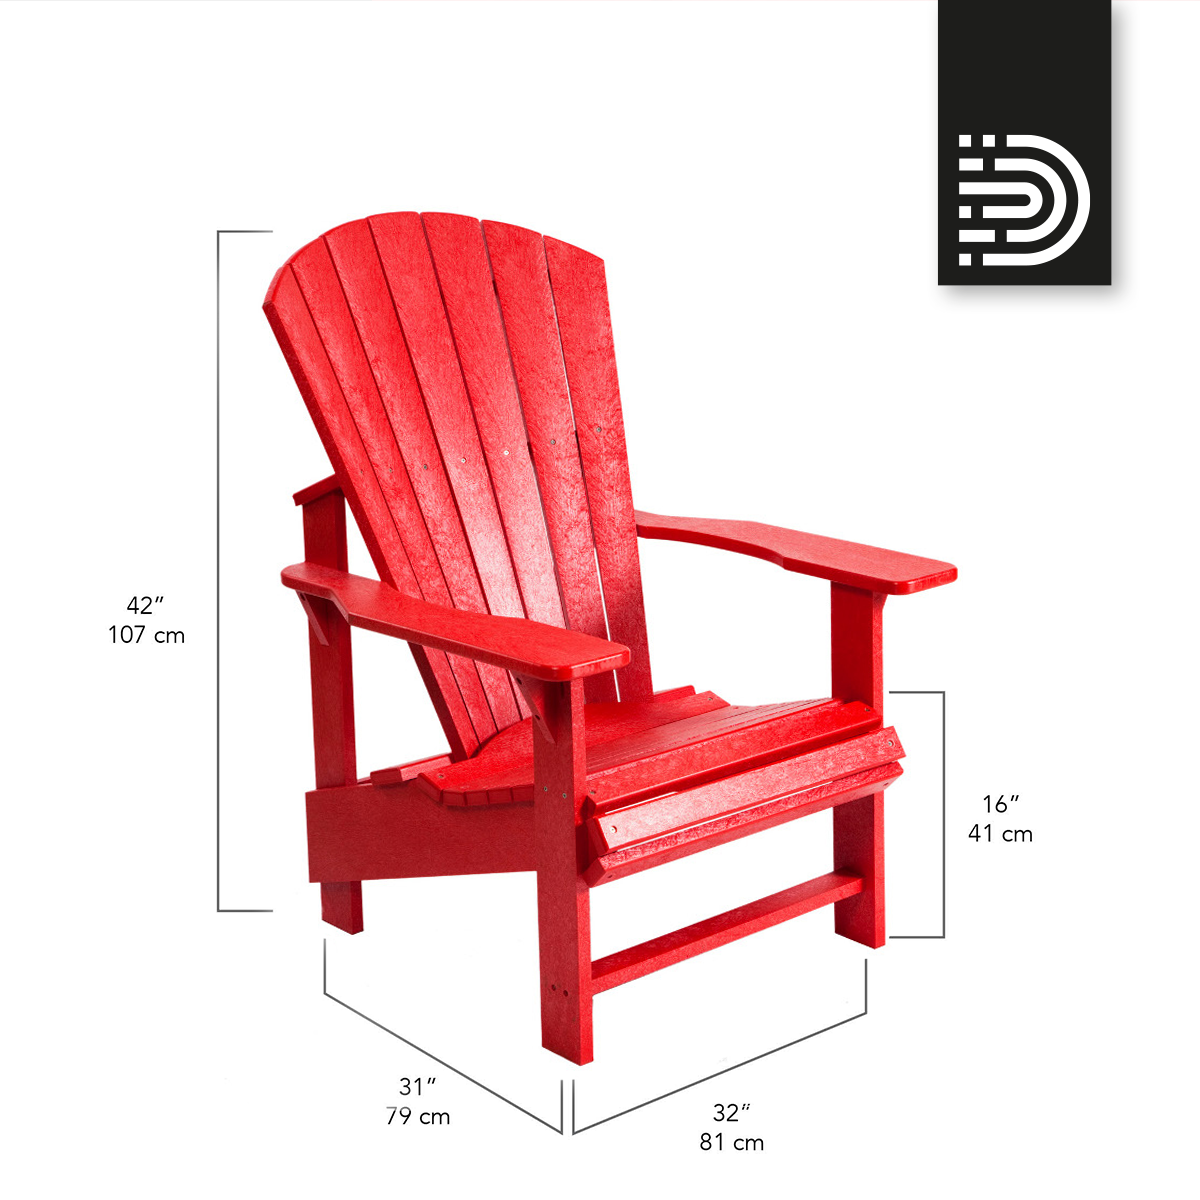 C03 Upright Adirondack Chair - red 01